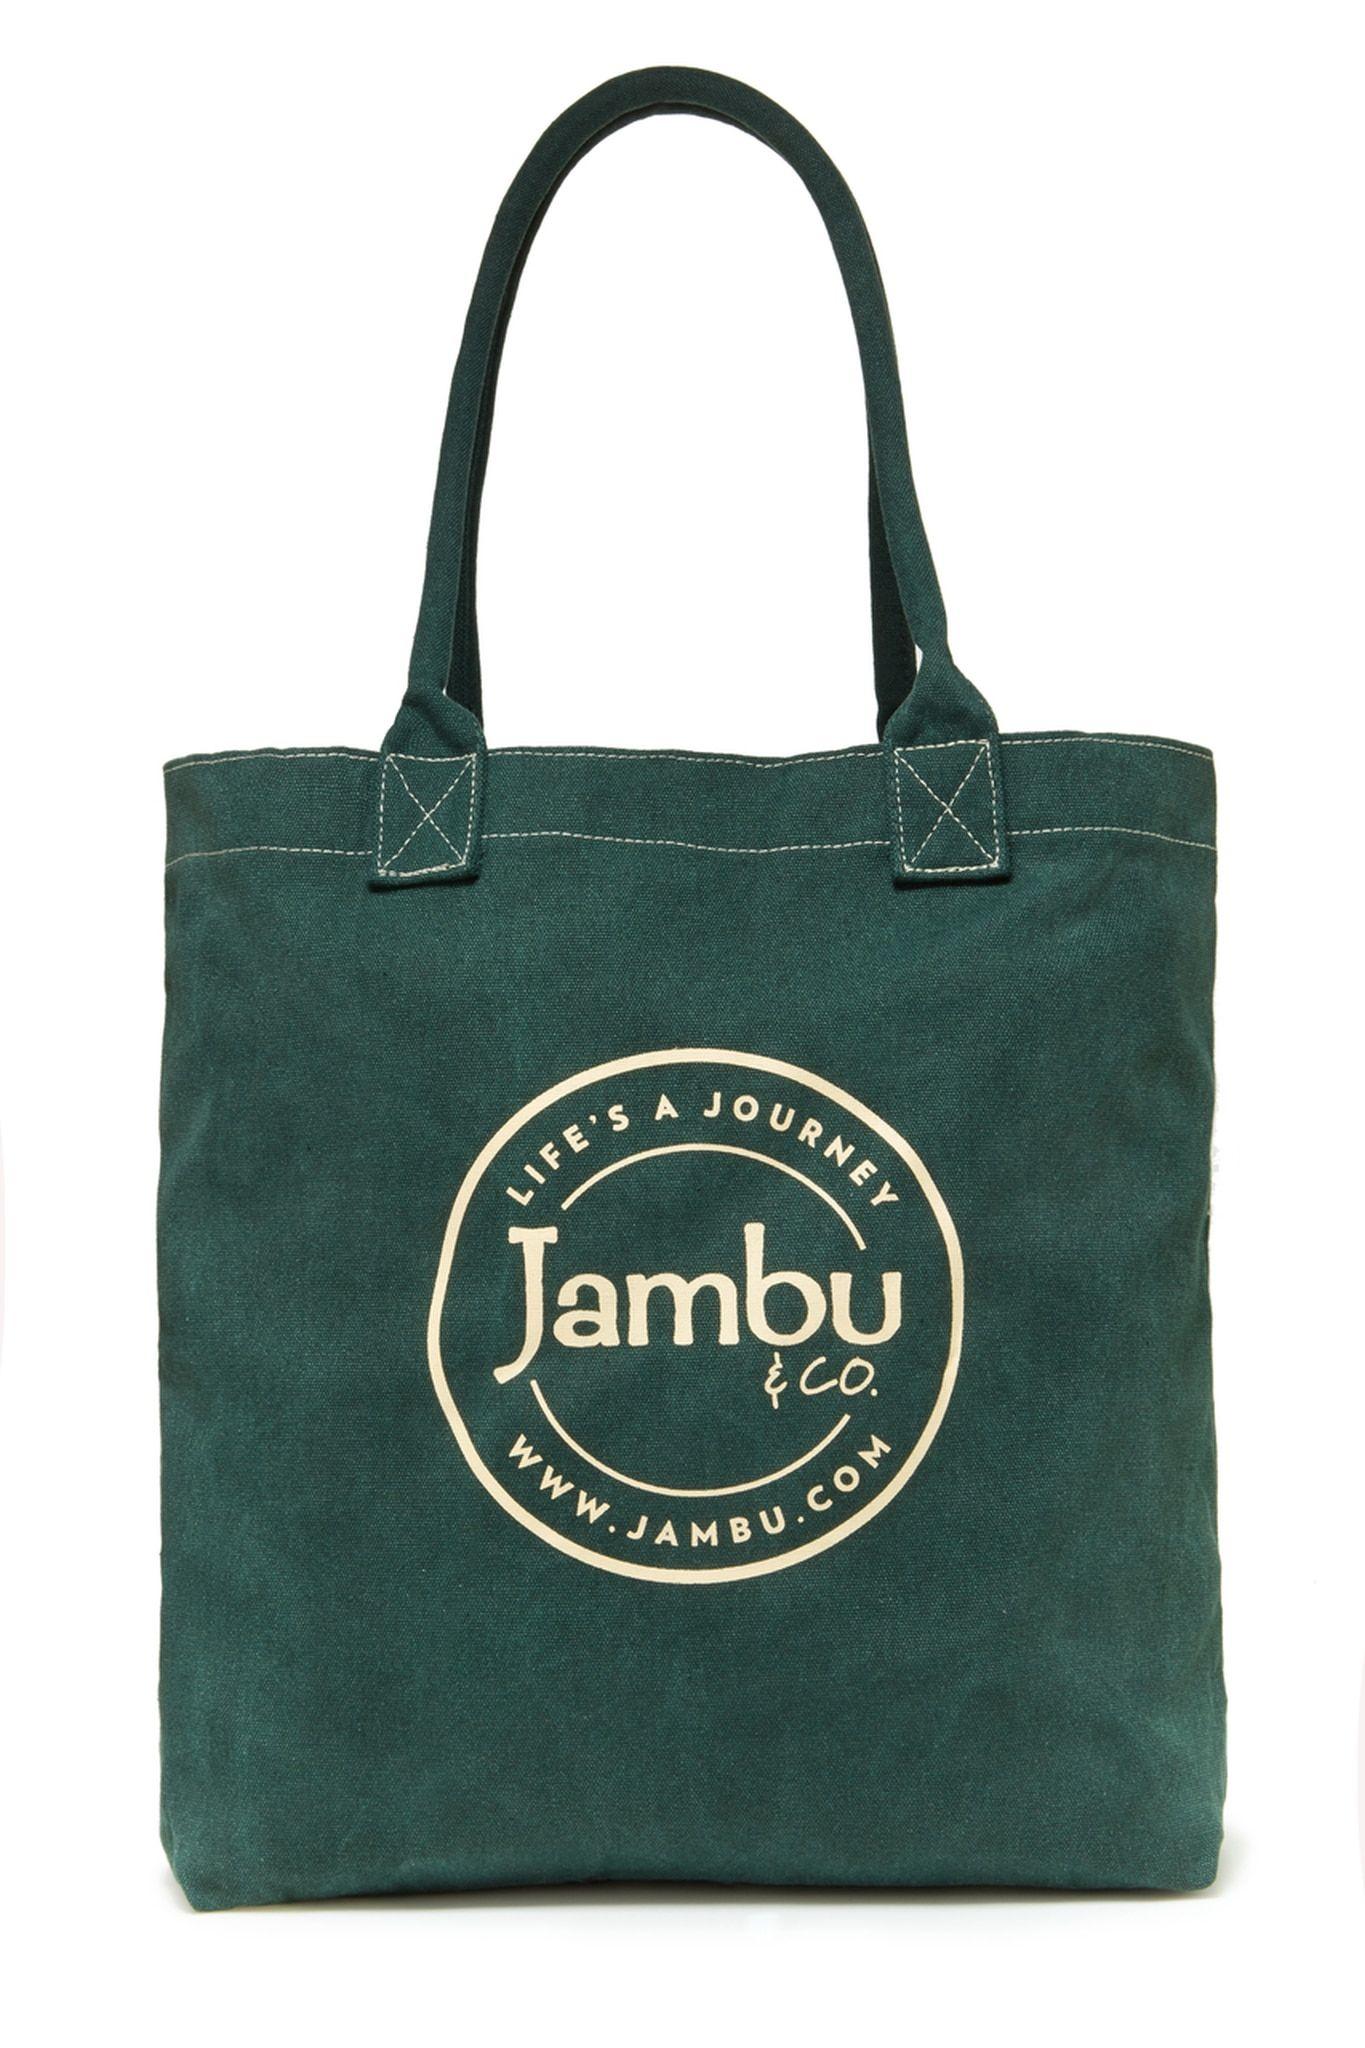 Jambu Logo - Gift With Purchase Tote Bag